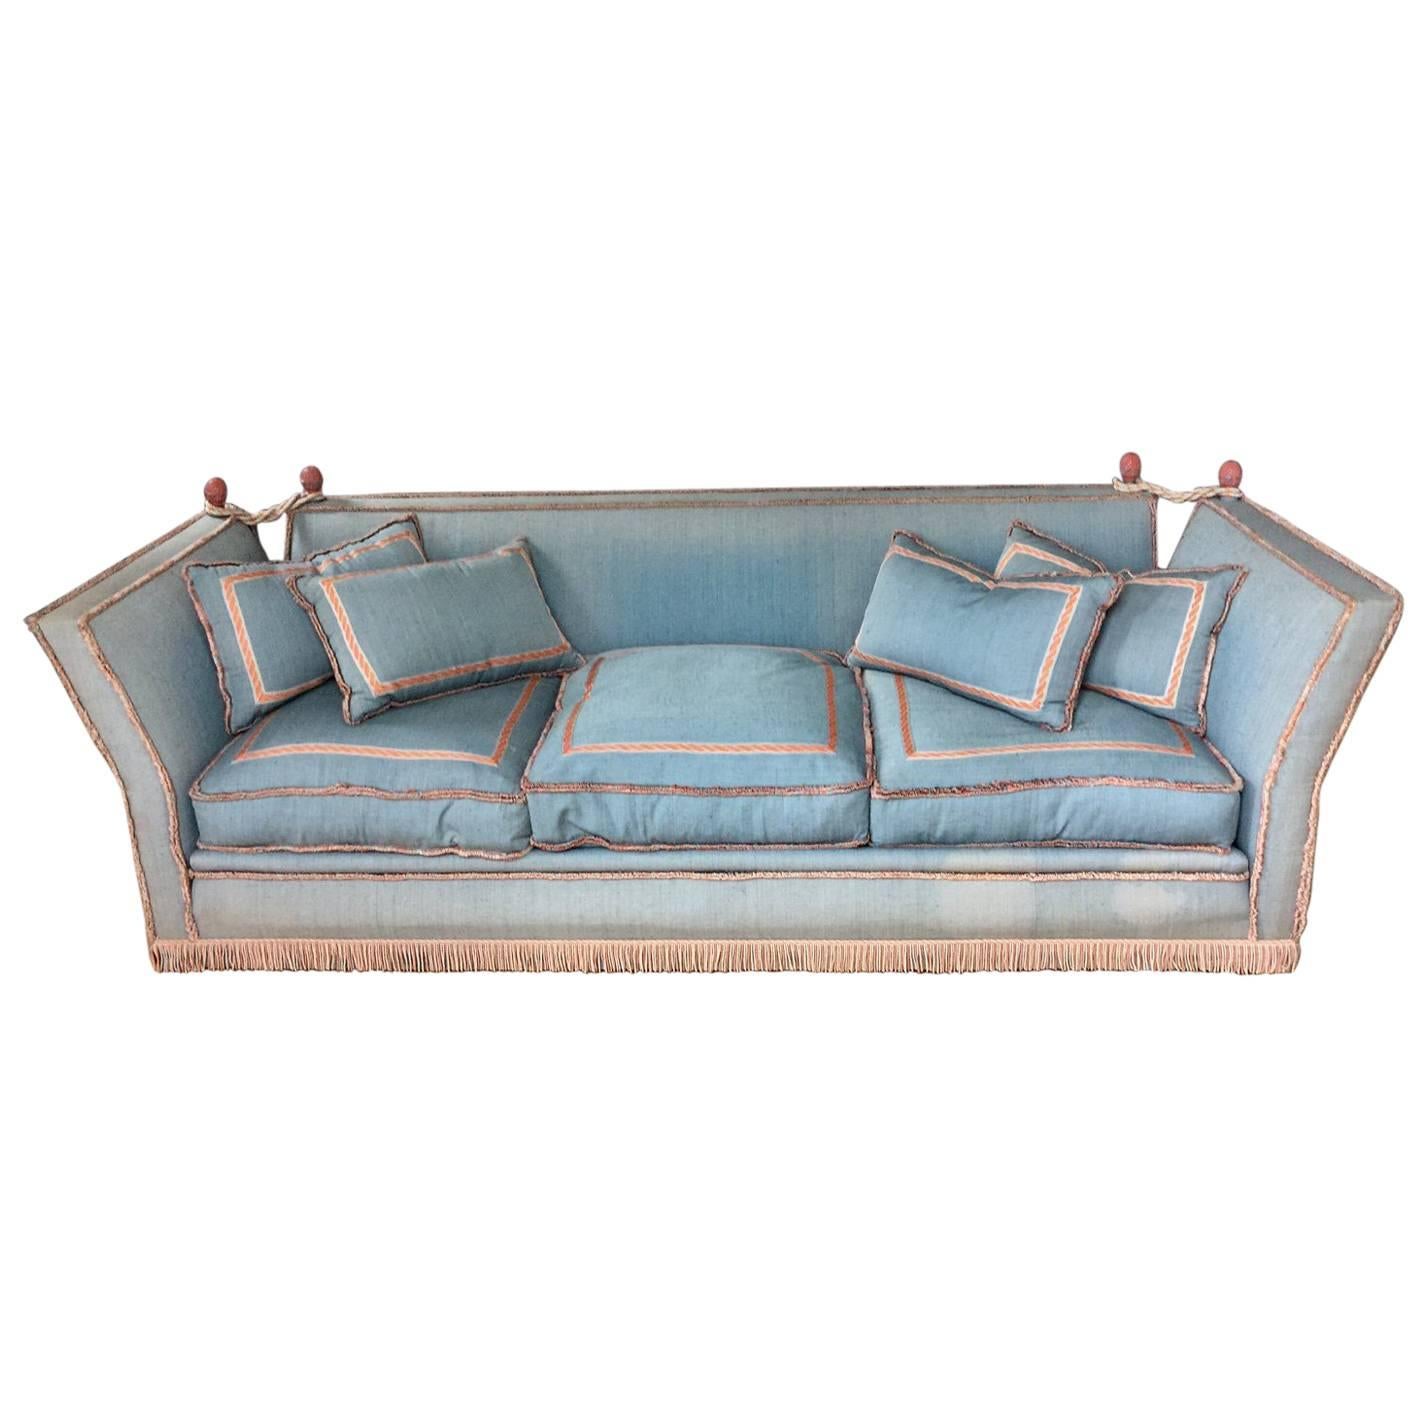 1940's French Salon Sofa with Original Fringe Upholstery